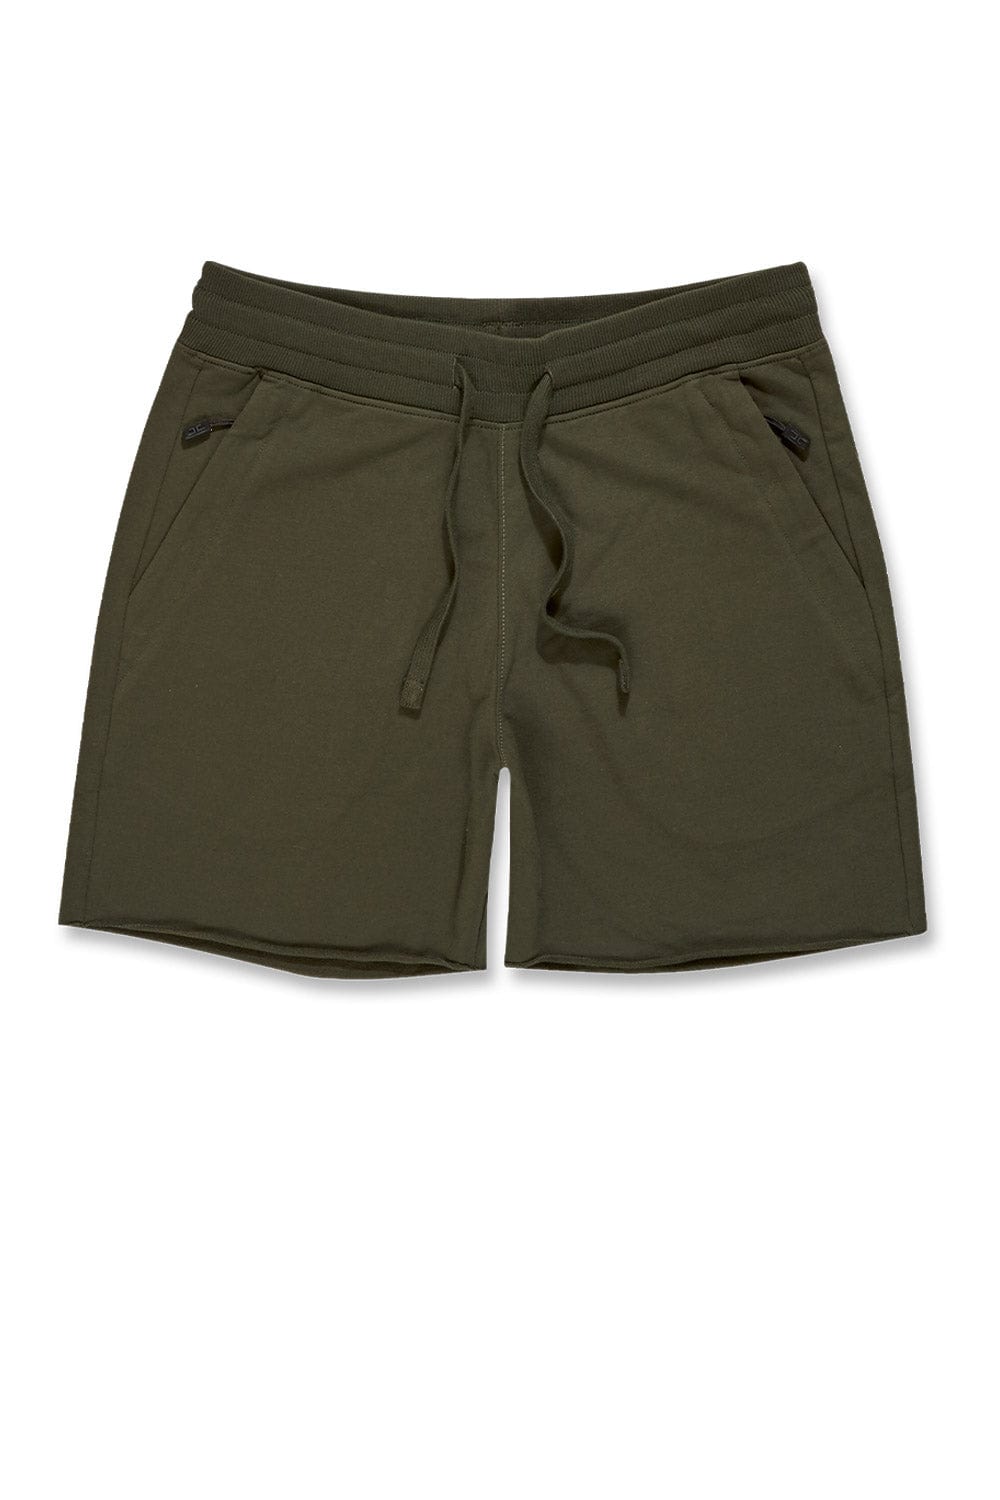 Jordan Craig Athletic - Summer Breeze Knit Shorts Army Green / S